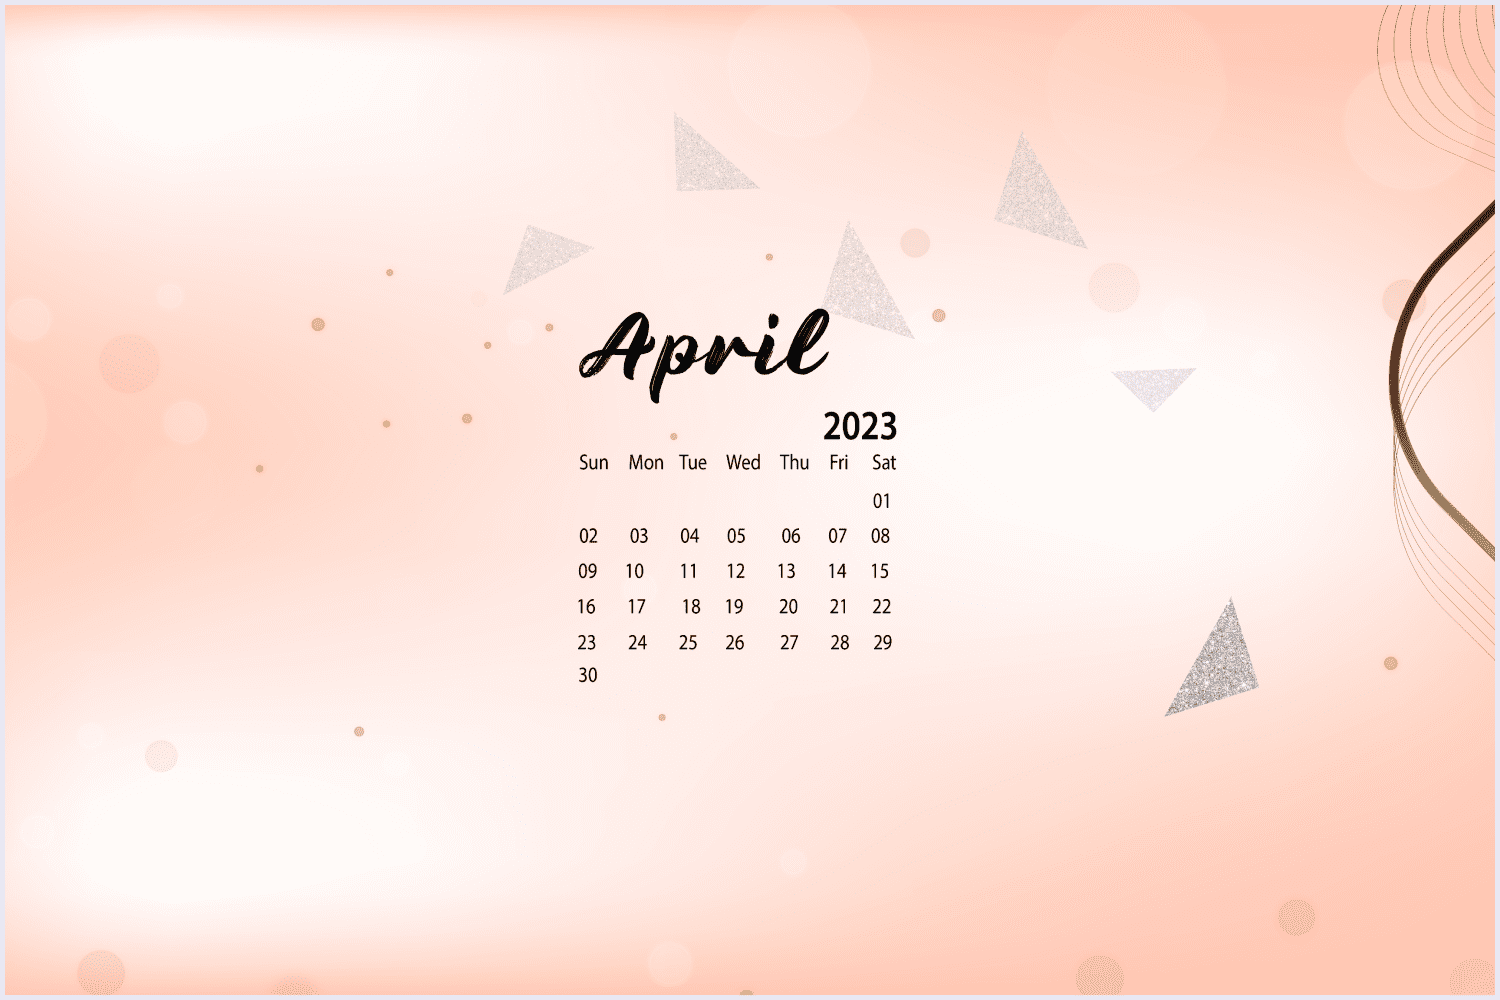 Cute April calendar featuring a fun and playful design.